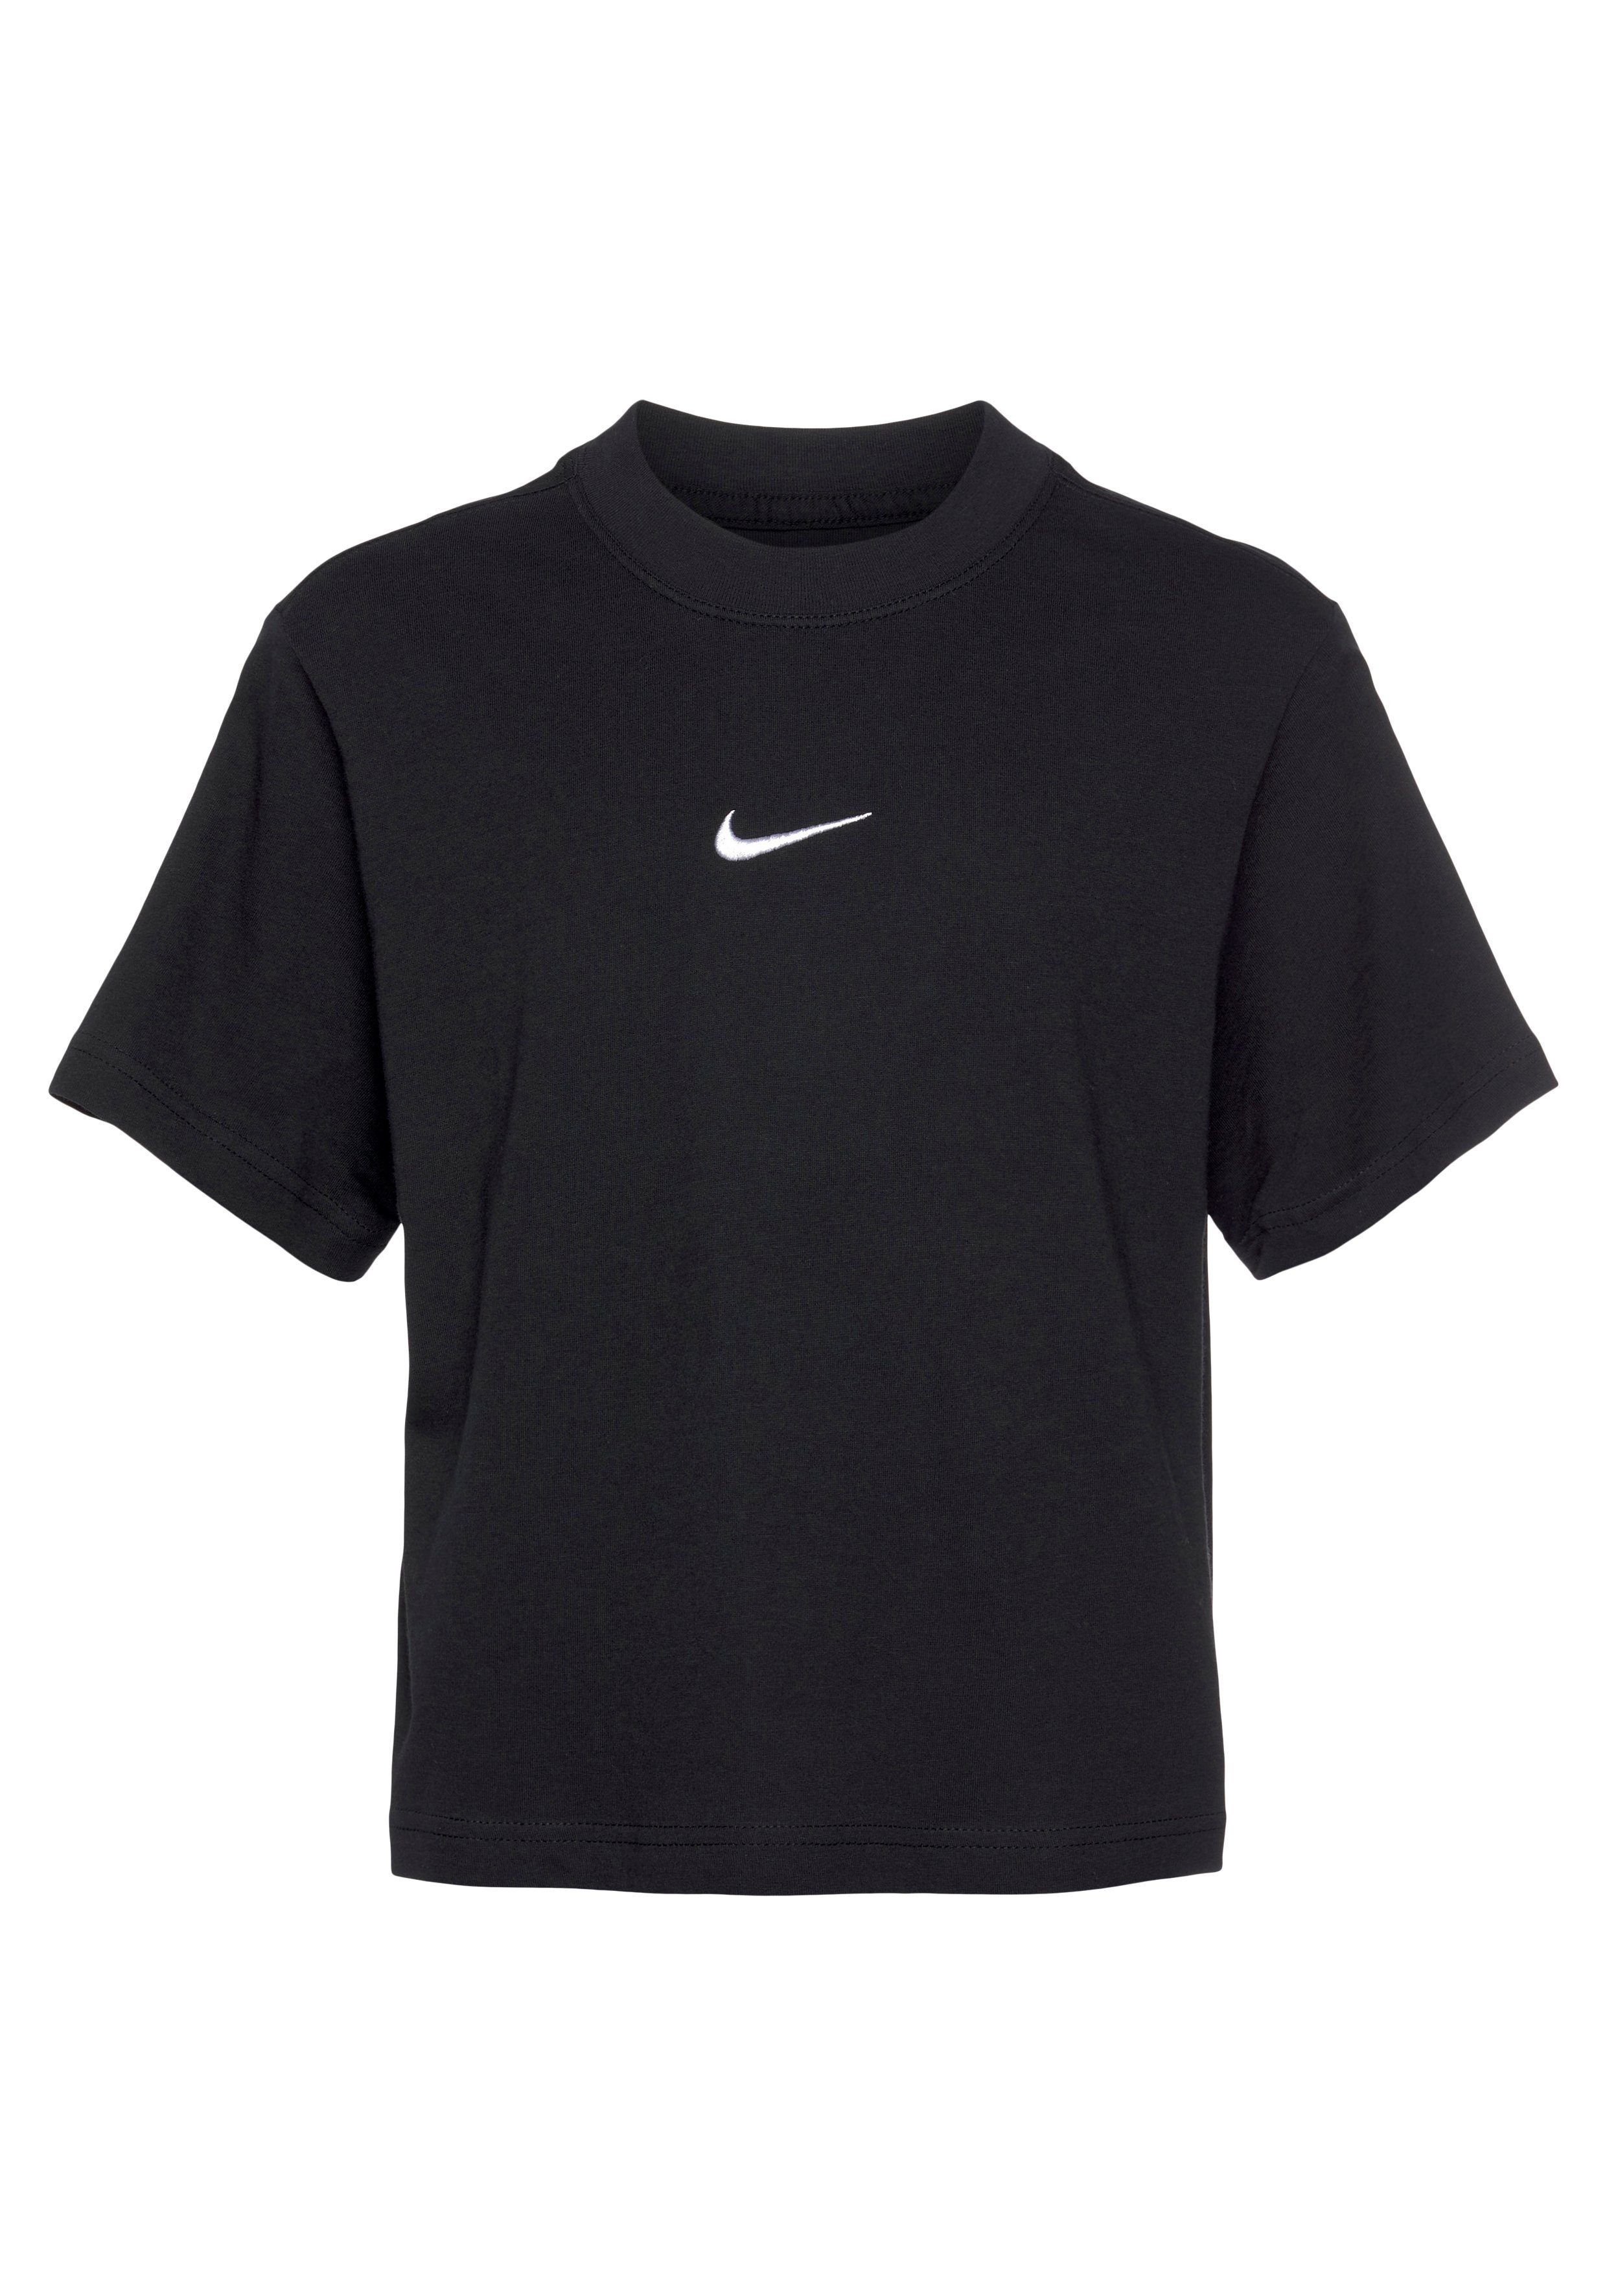 KIDS' BLACK/WHITE (GIRLS) T-SHIRT BIG Sportswear Nike T-Shirt